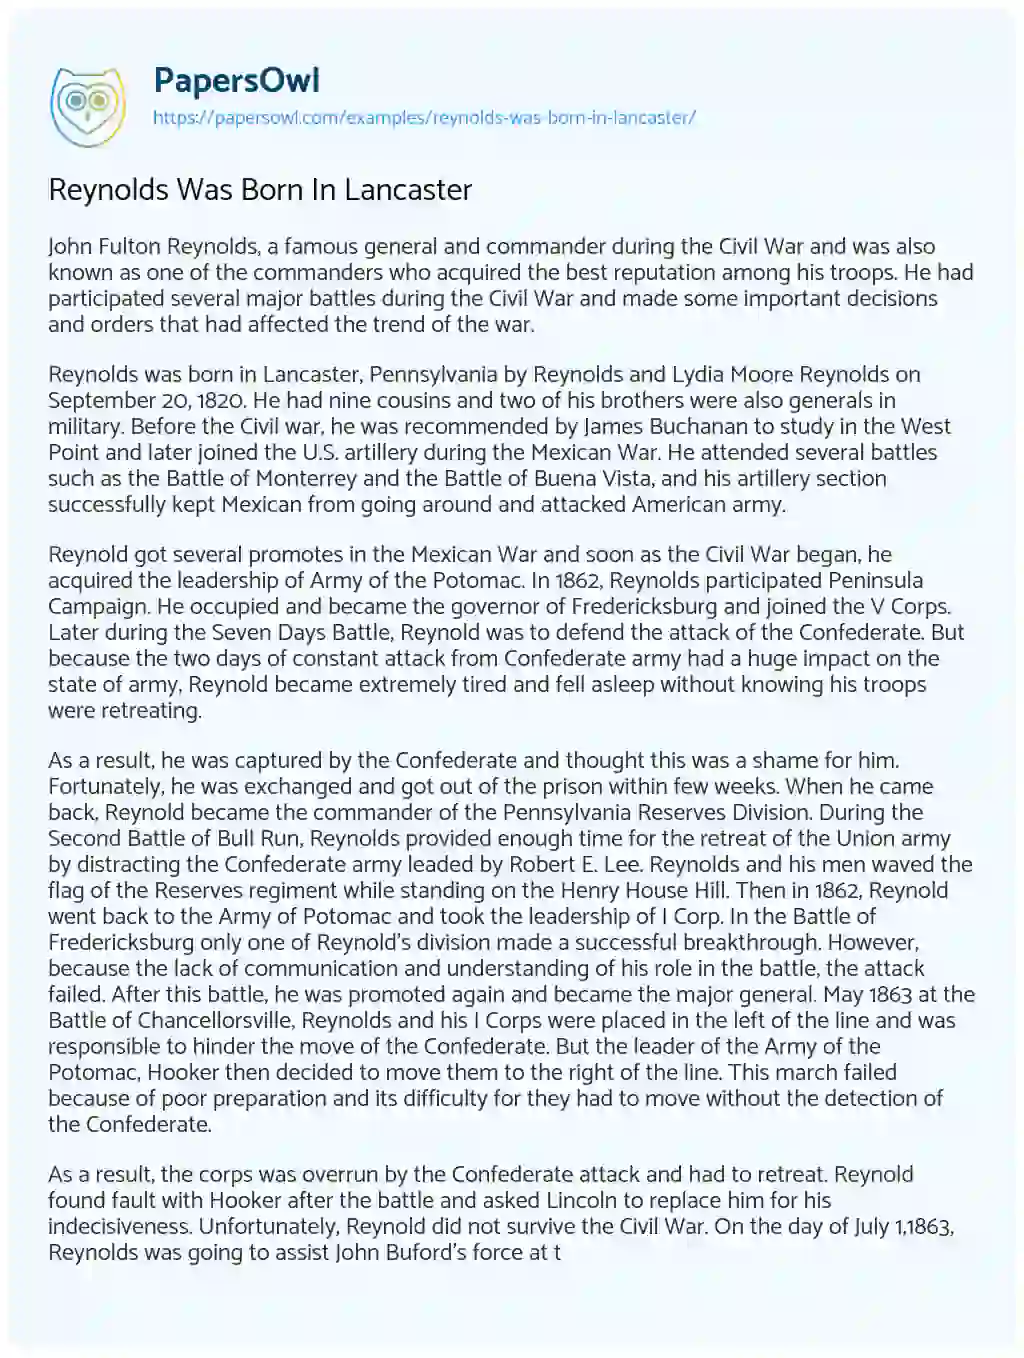 Essay on Reynolds was Born in Lancaster